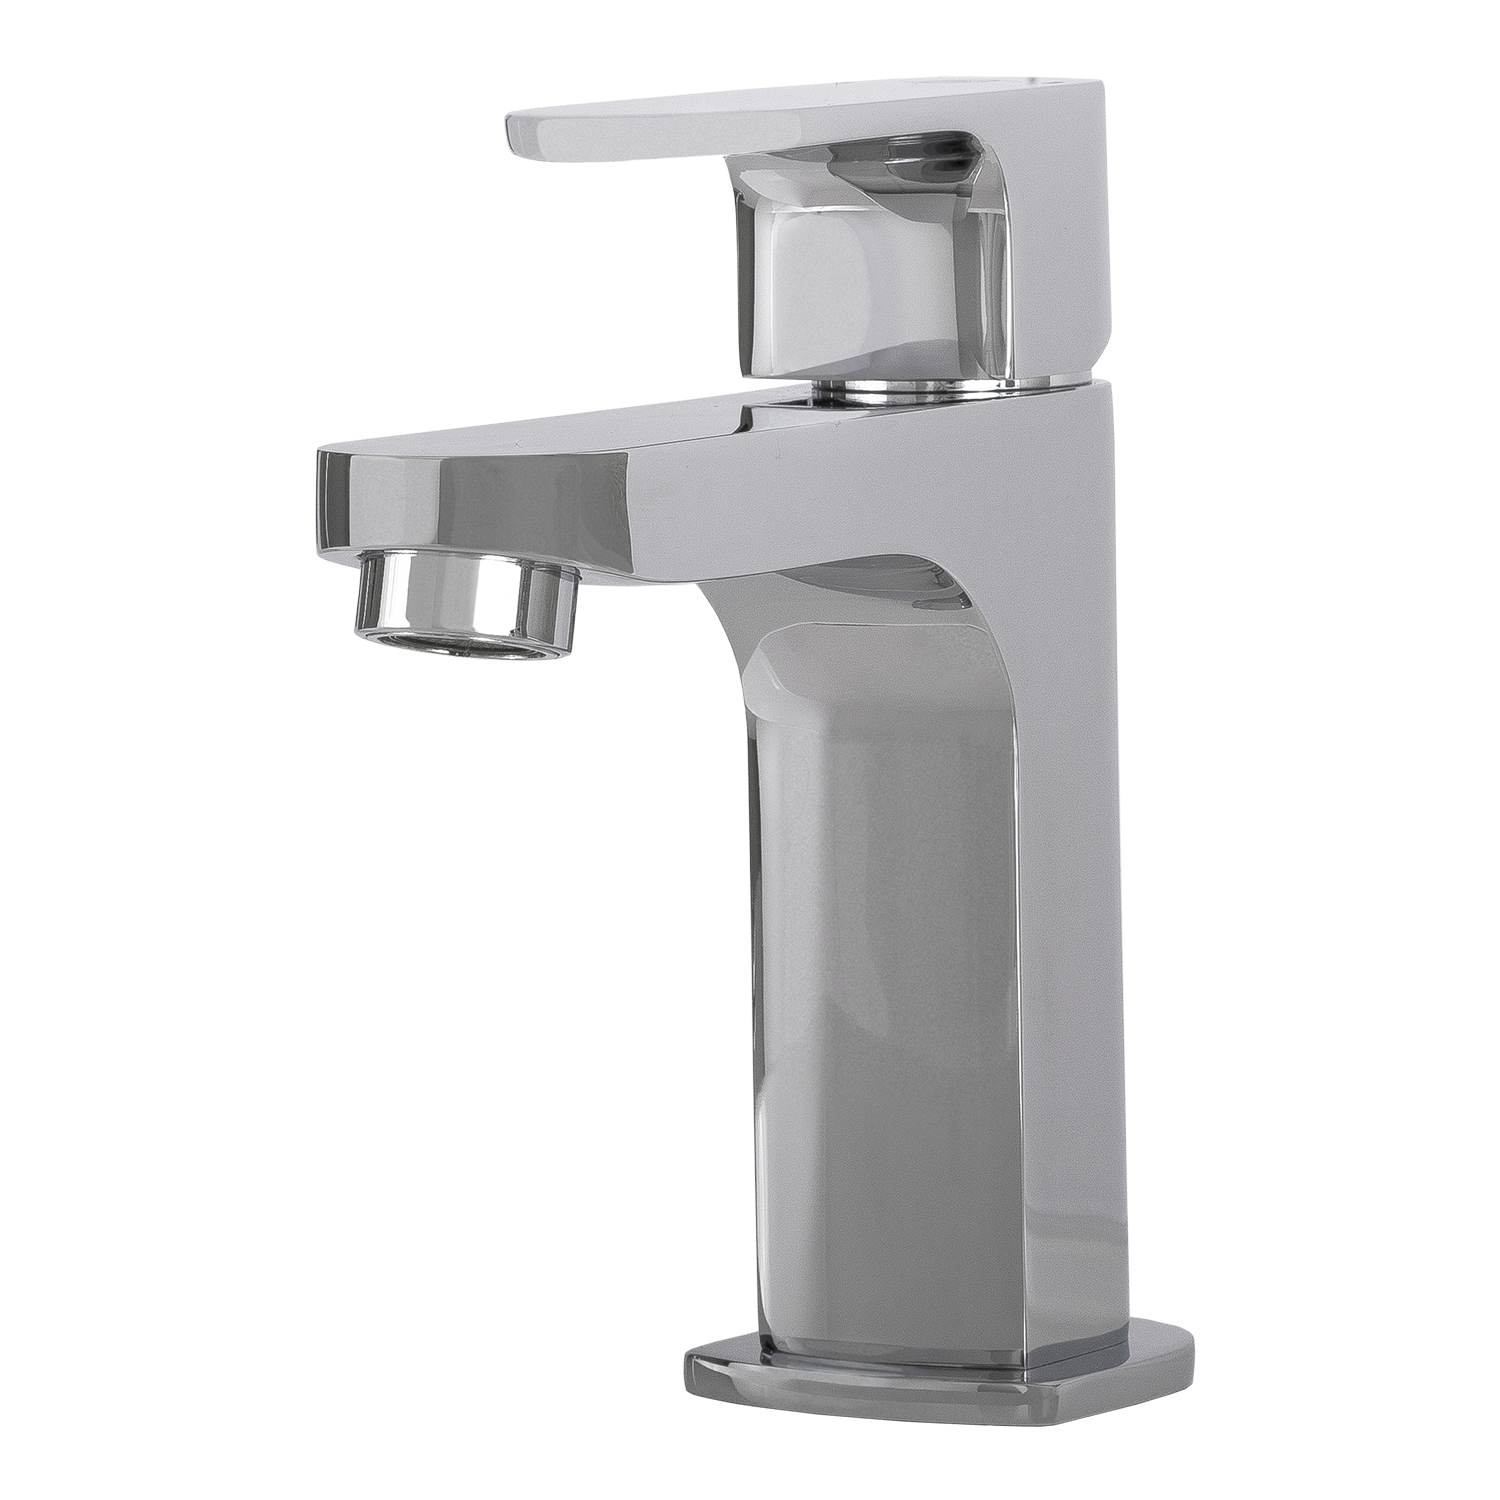 DAX Single Handle Bathroom Faucet, Brass Body, Chrome Finish, 3-15/16 x 5-13/16 Inches (DAX-9829)